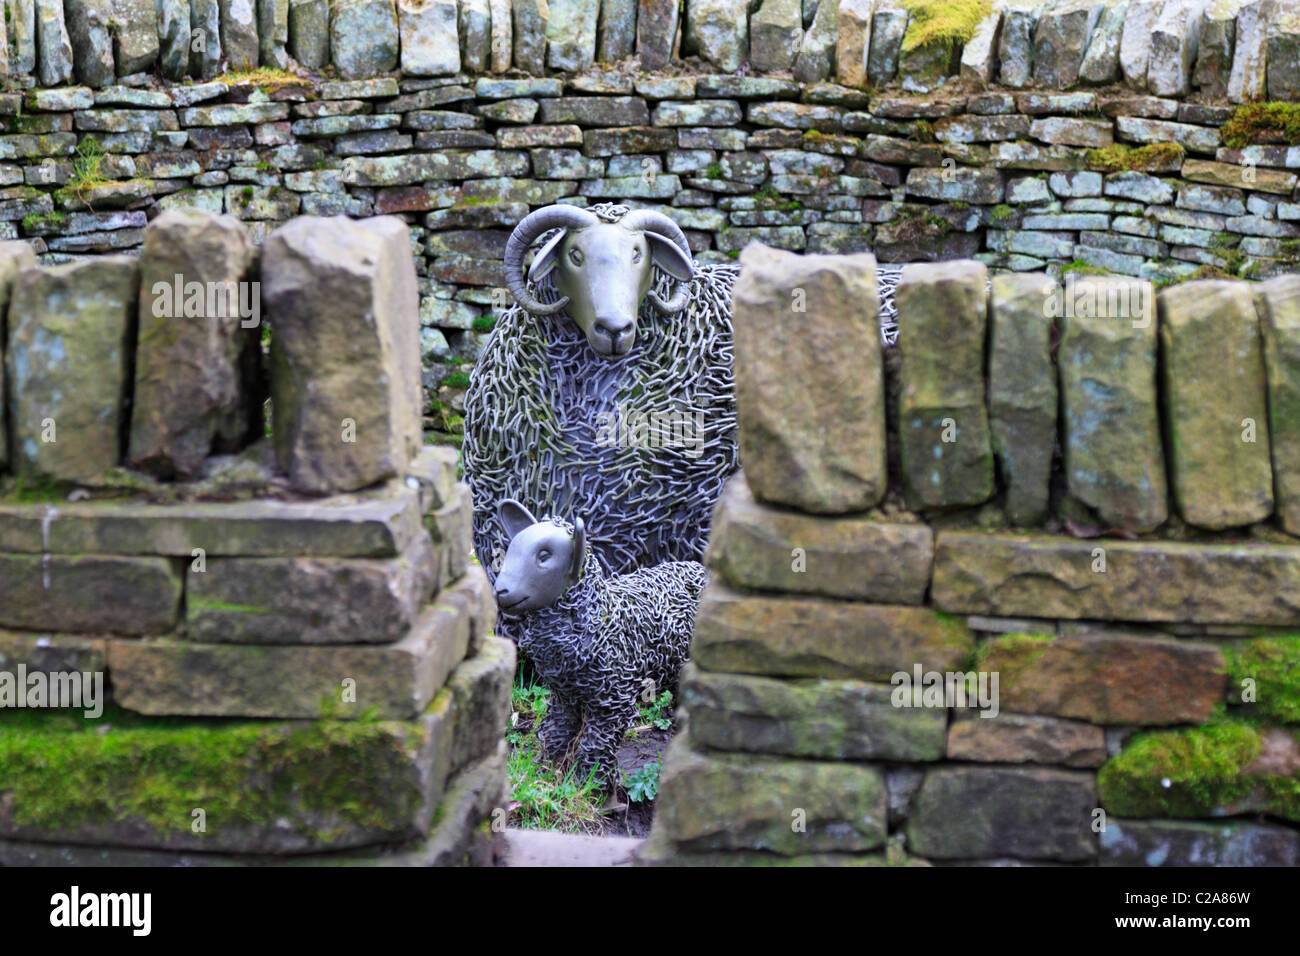 Metal sheep and lamb sculpture hi-res stock photography and images - Alamy